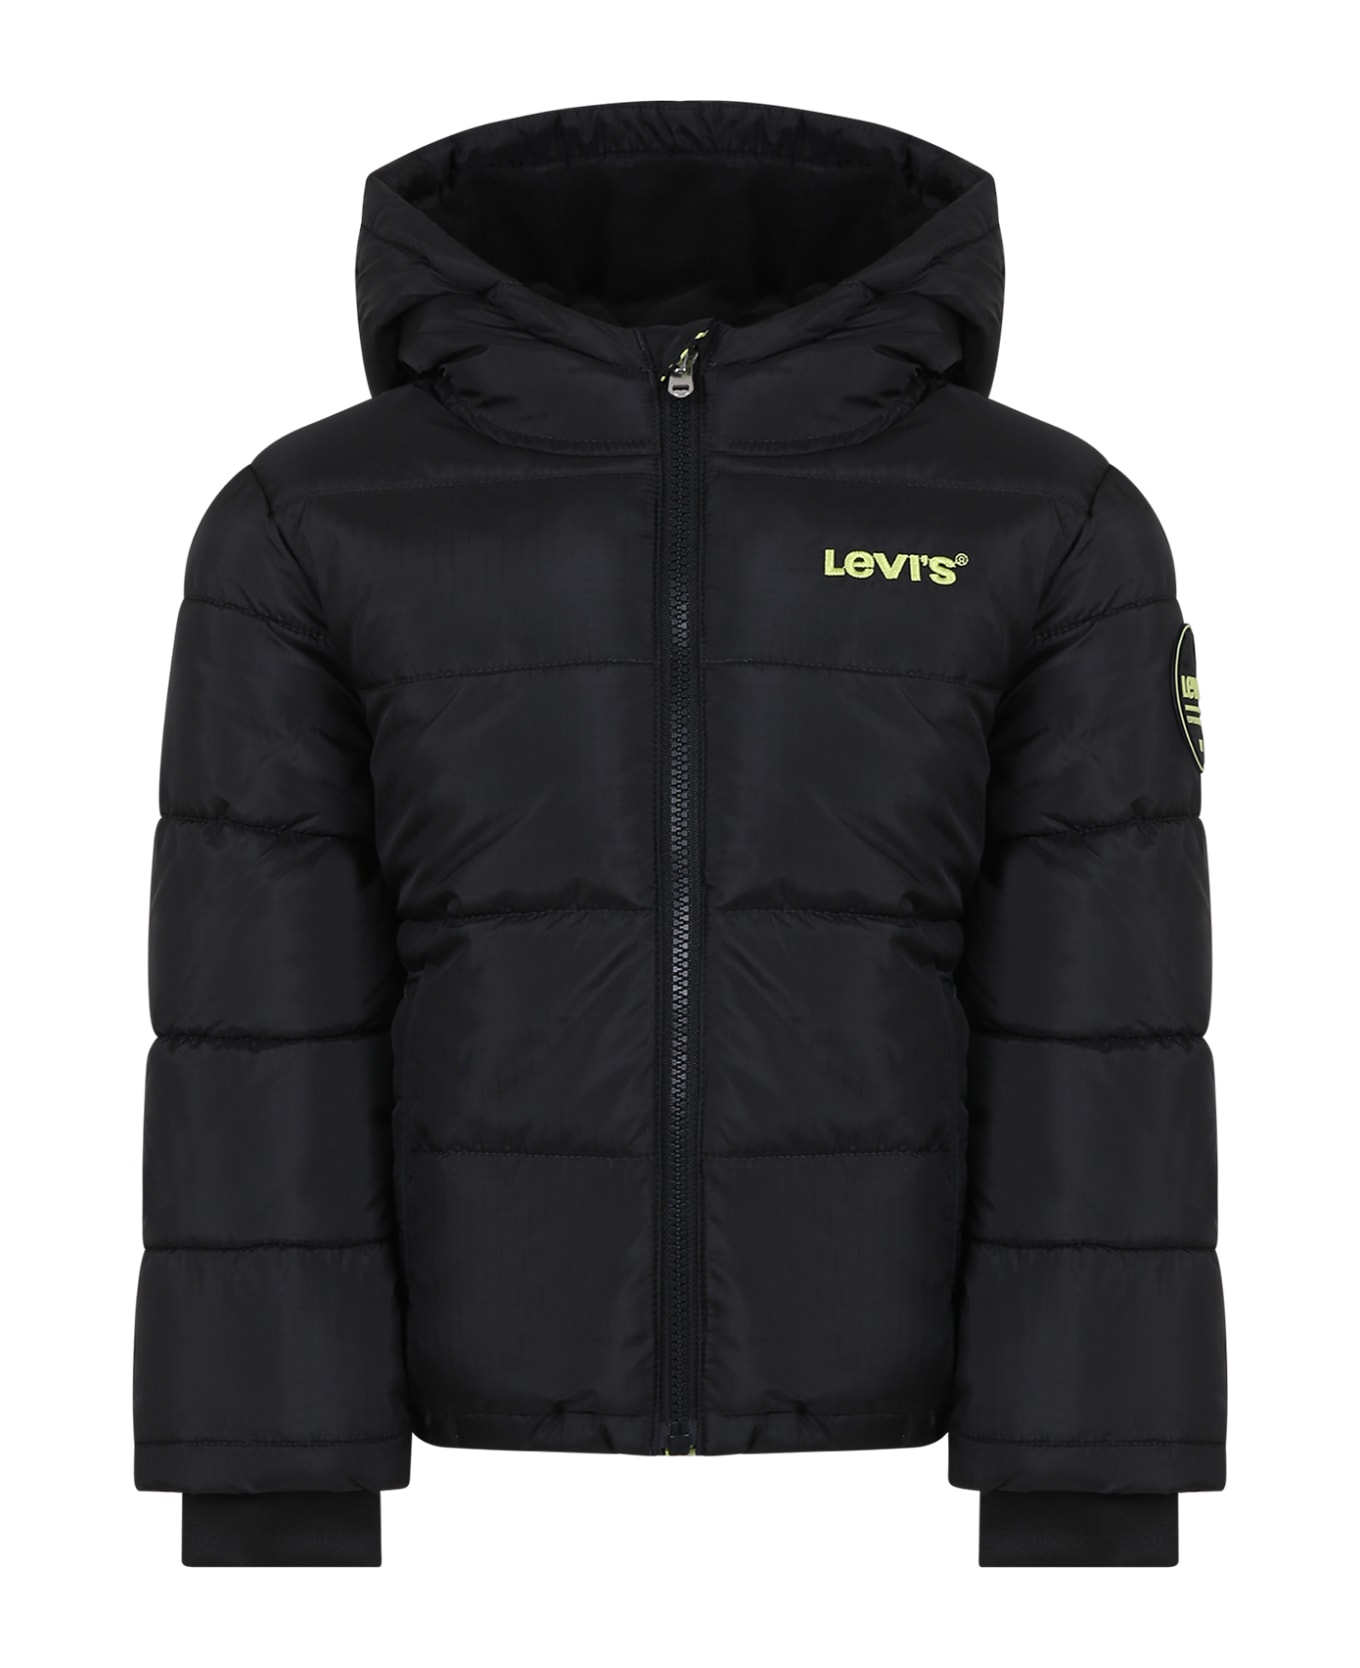 Levi's Black Jacket For Boy With Logo - Black